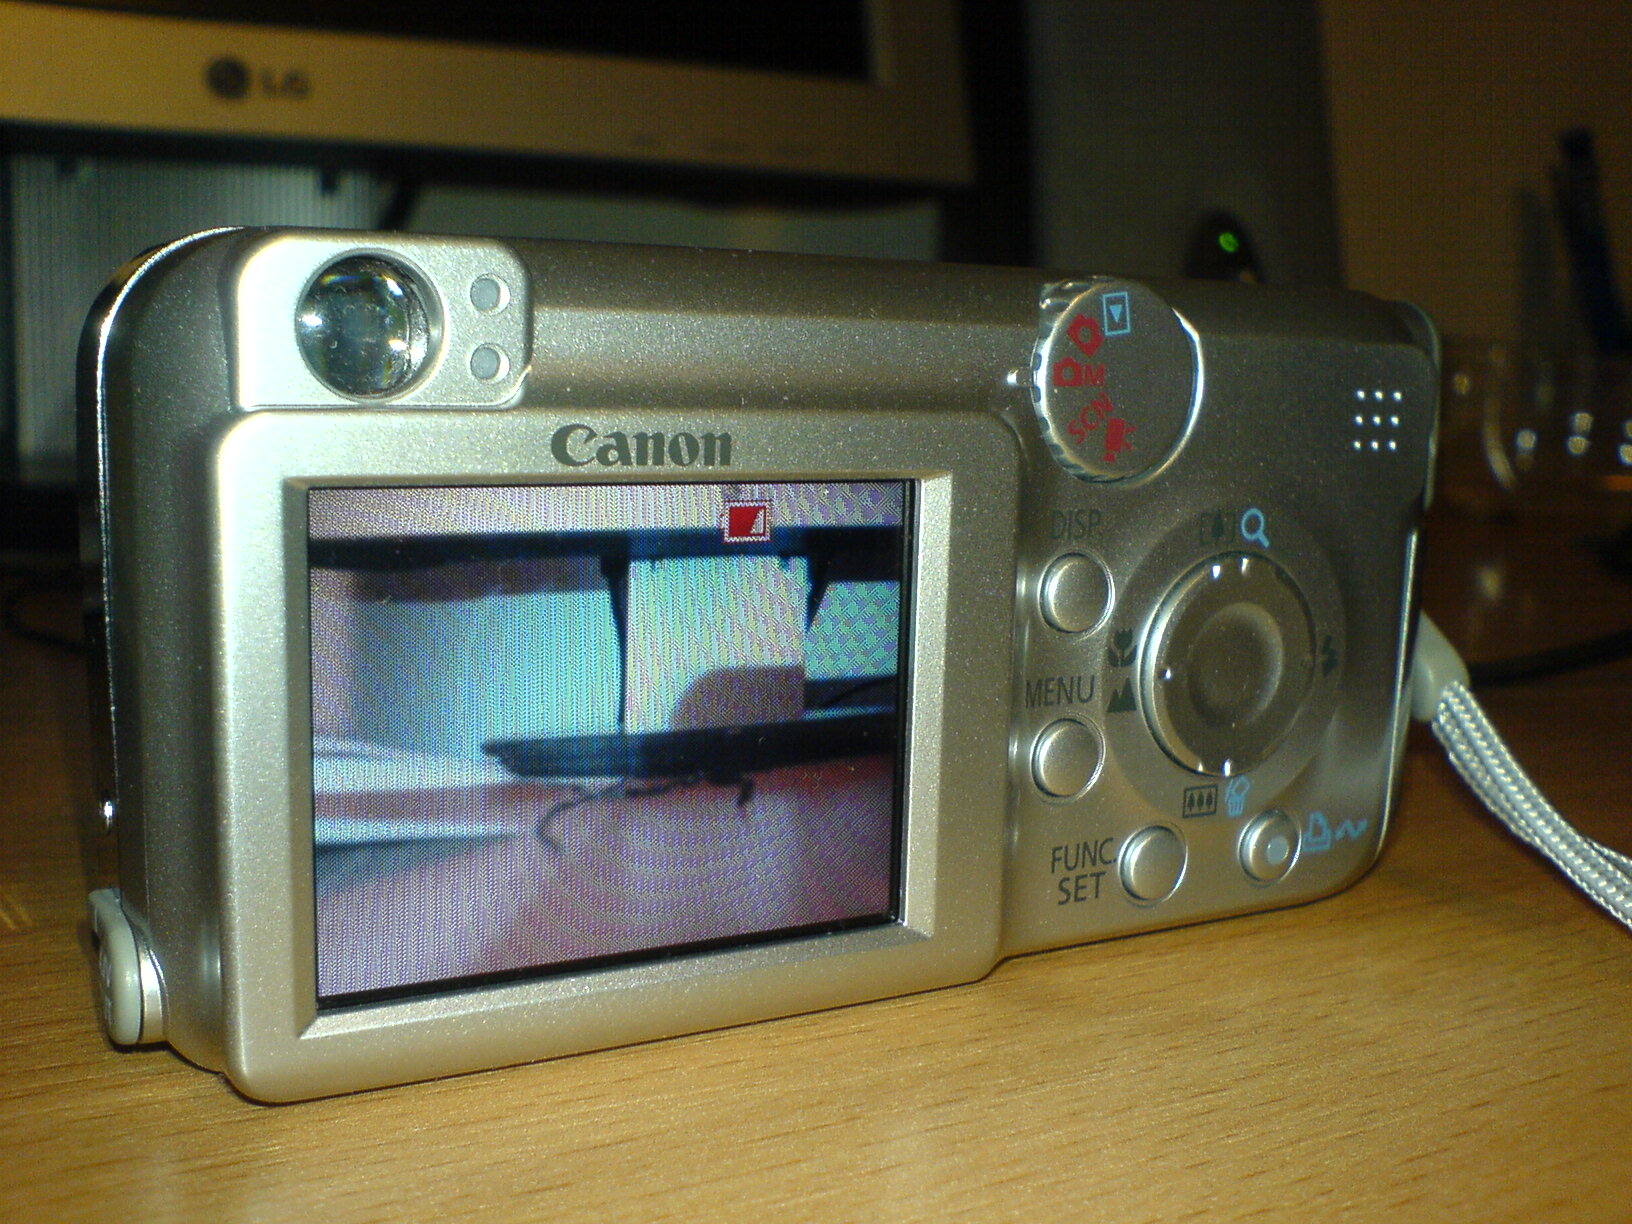 File:Canon PowerShot A460 4.JPG - Wikimedia Commons